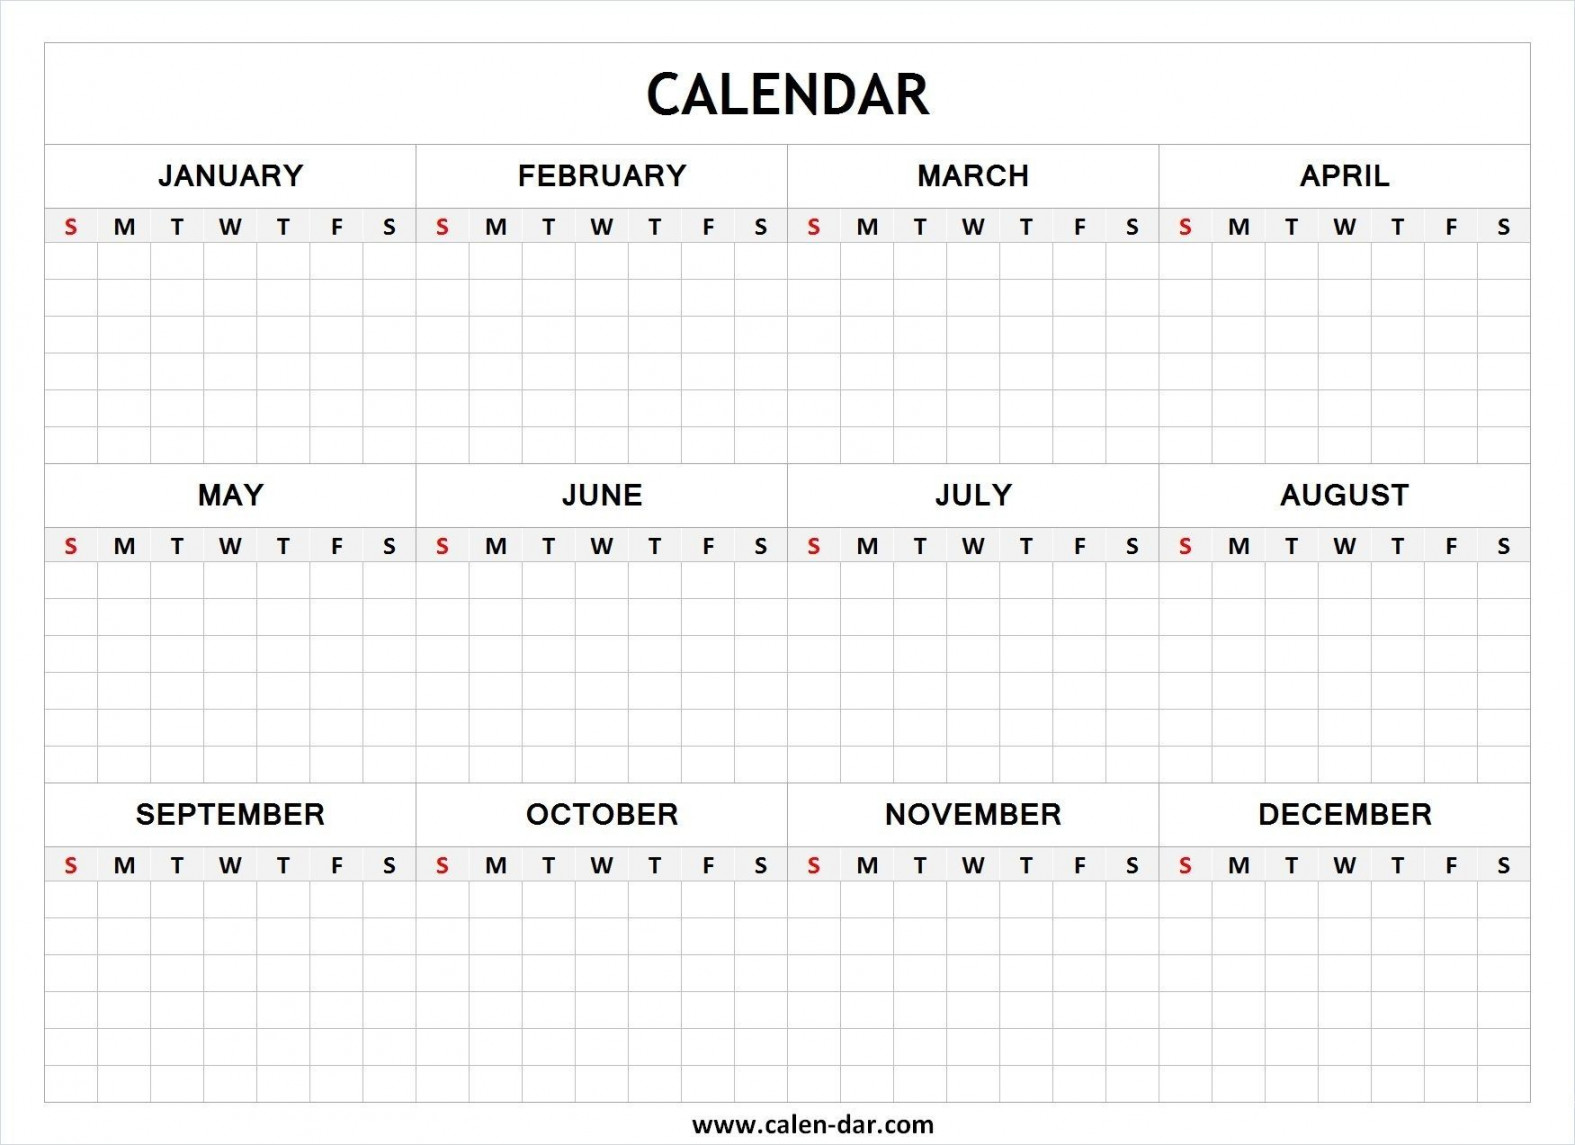 Free Yearly Calendar Template  Calendar template, Yearly calendar